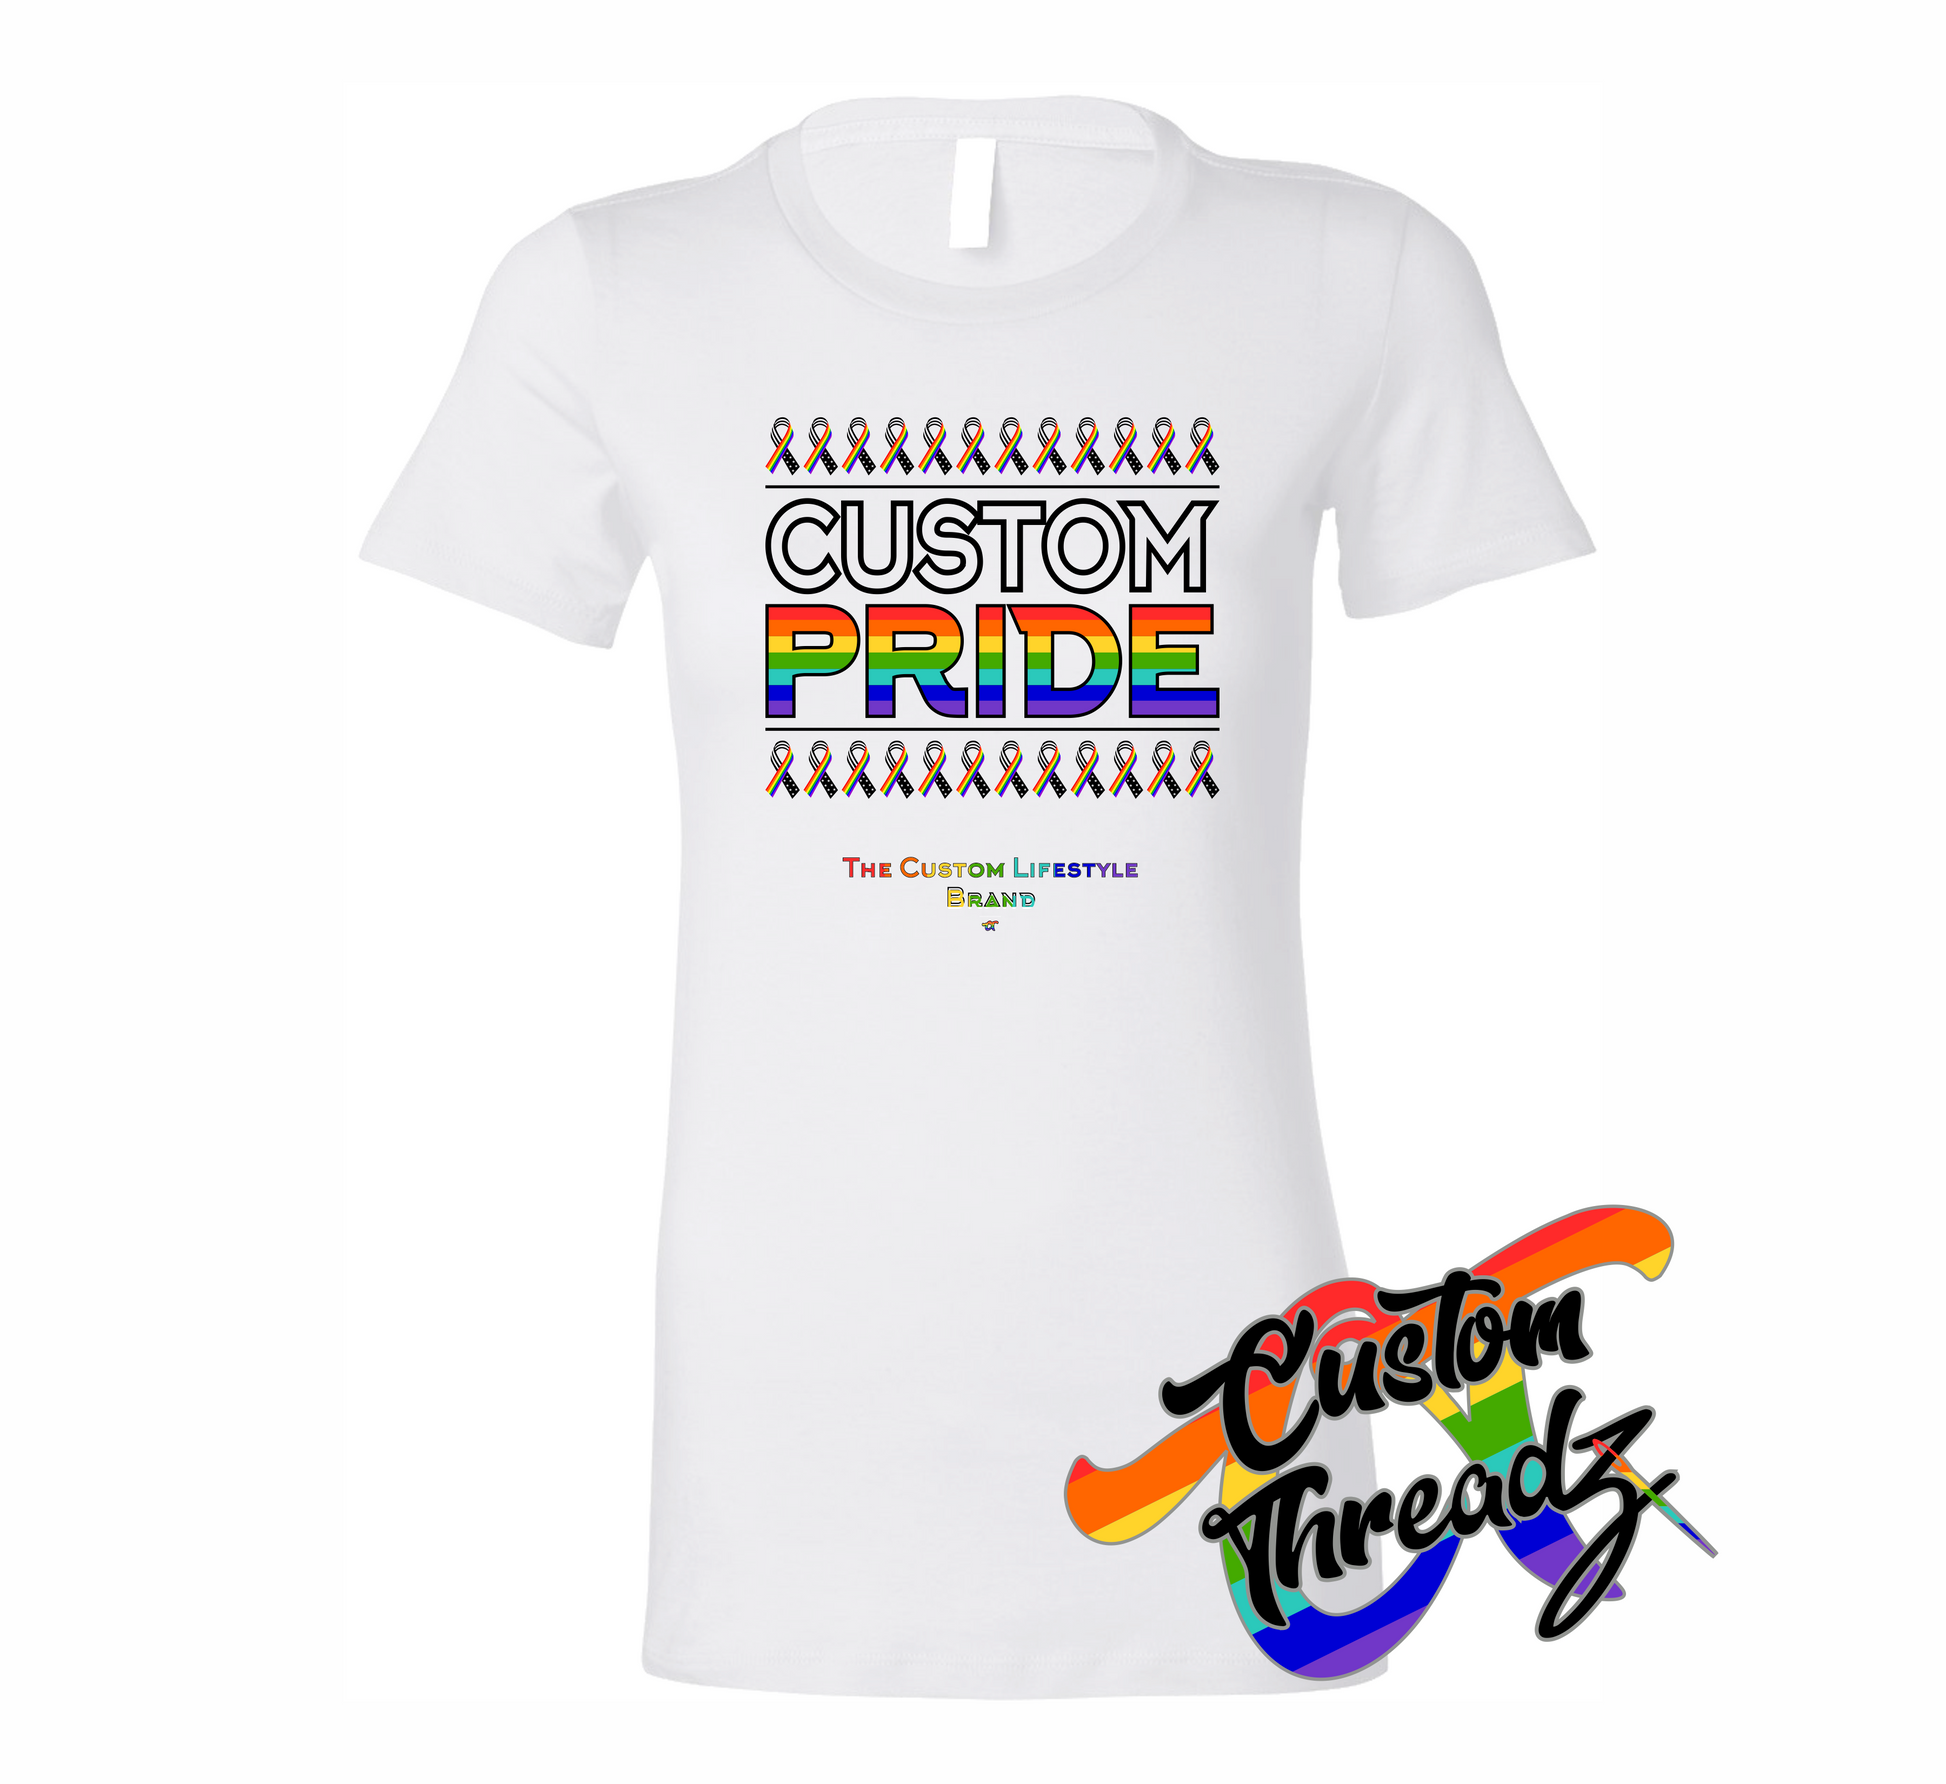 white womens tee with custom pride rainbow DTG printed design